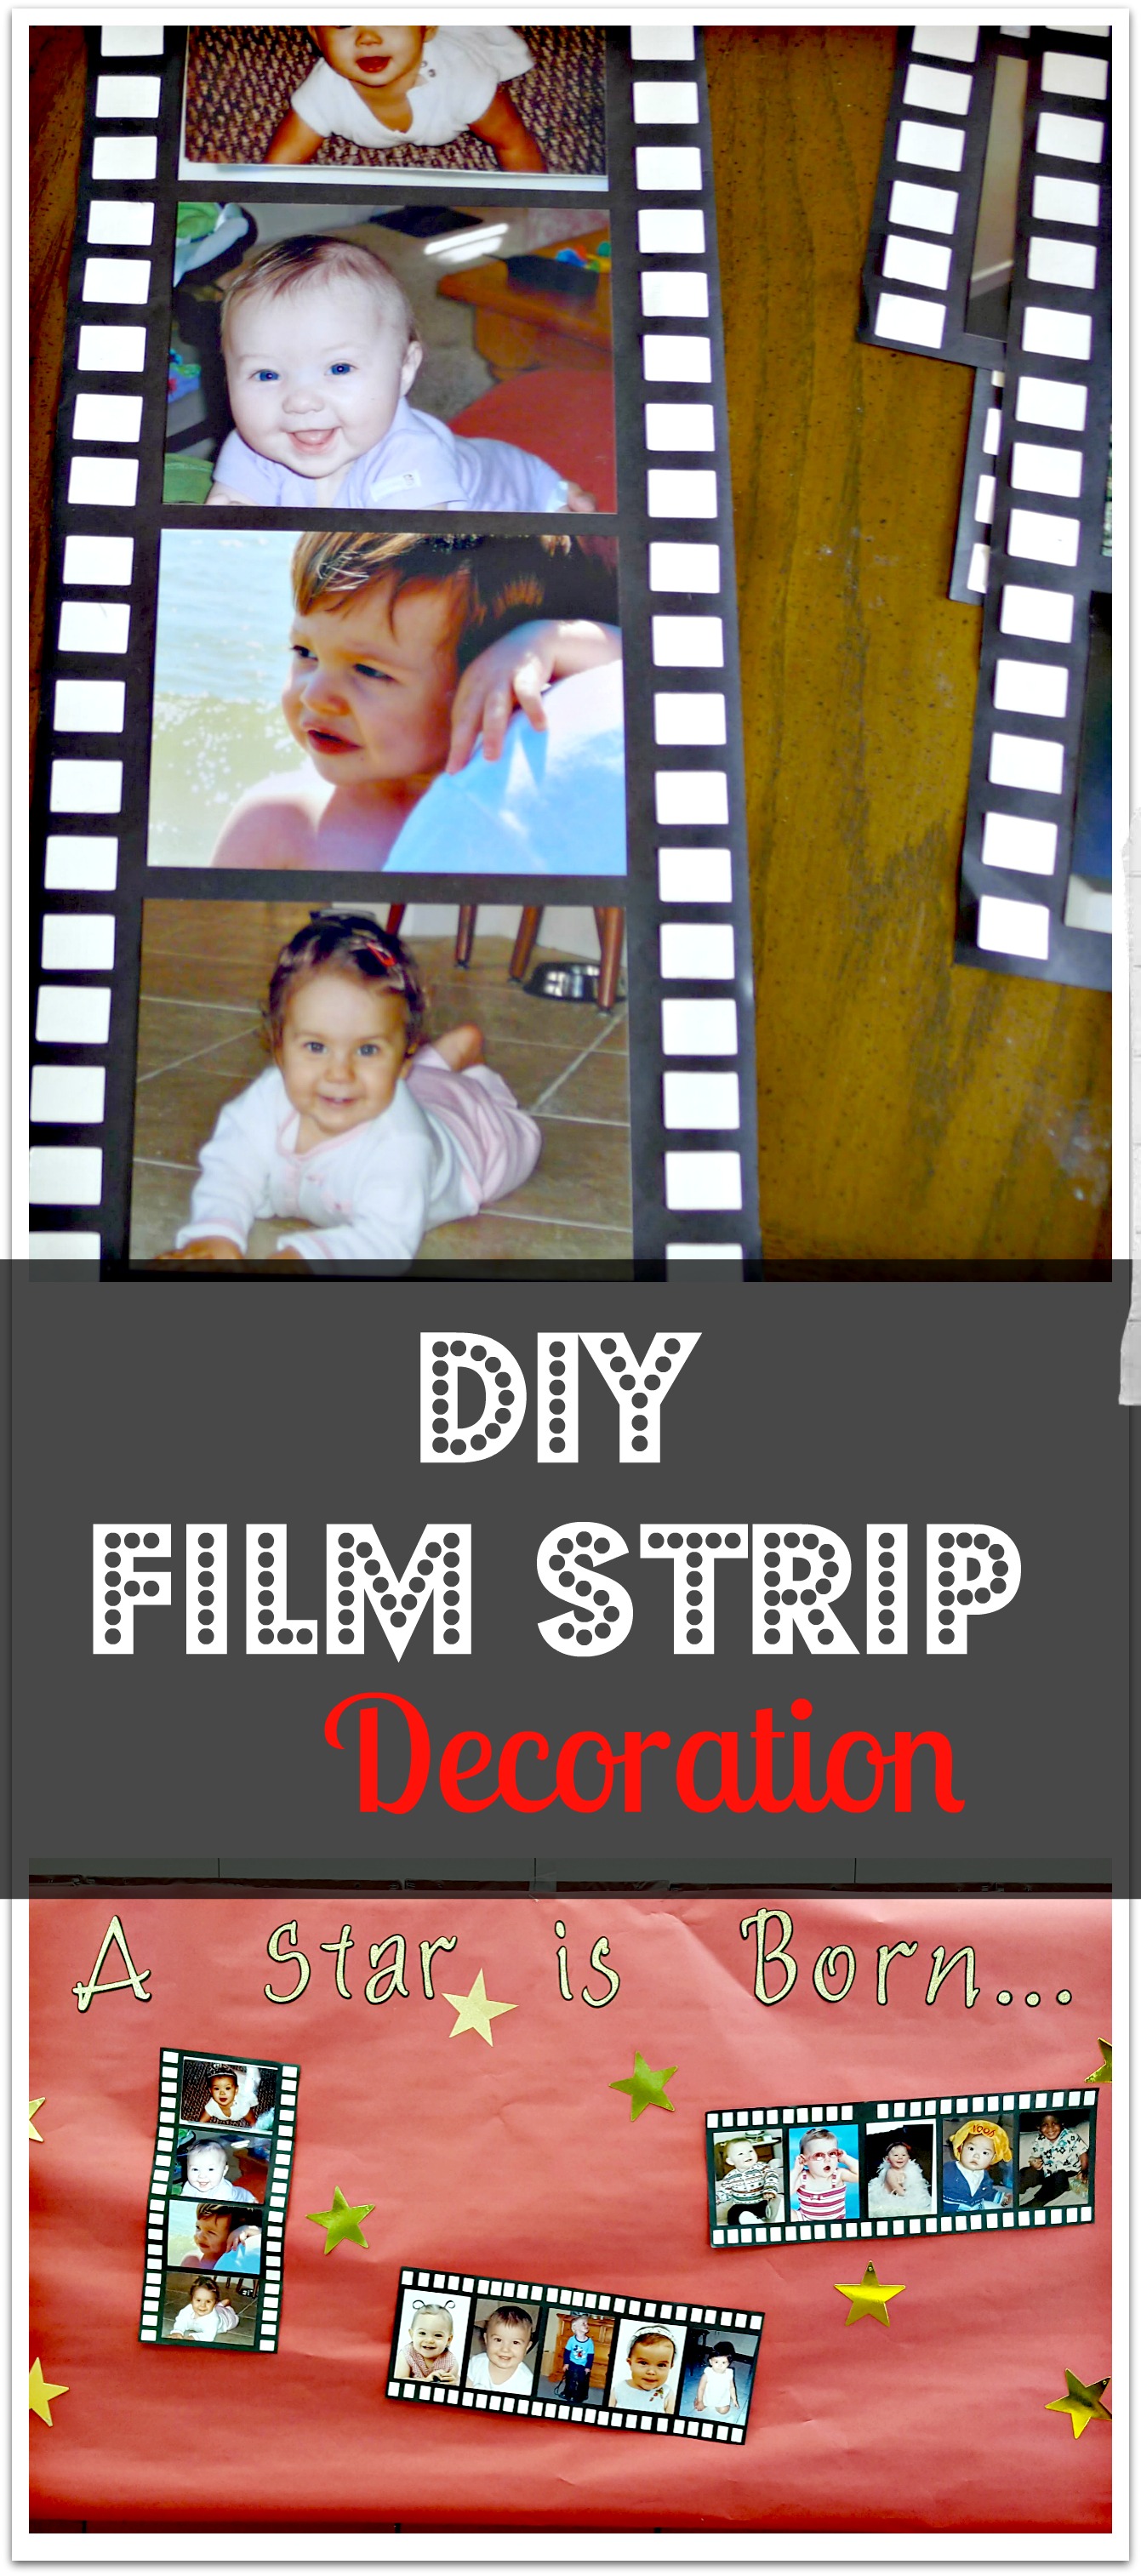 diy film strip decoration